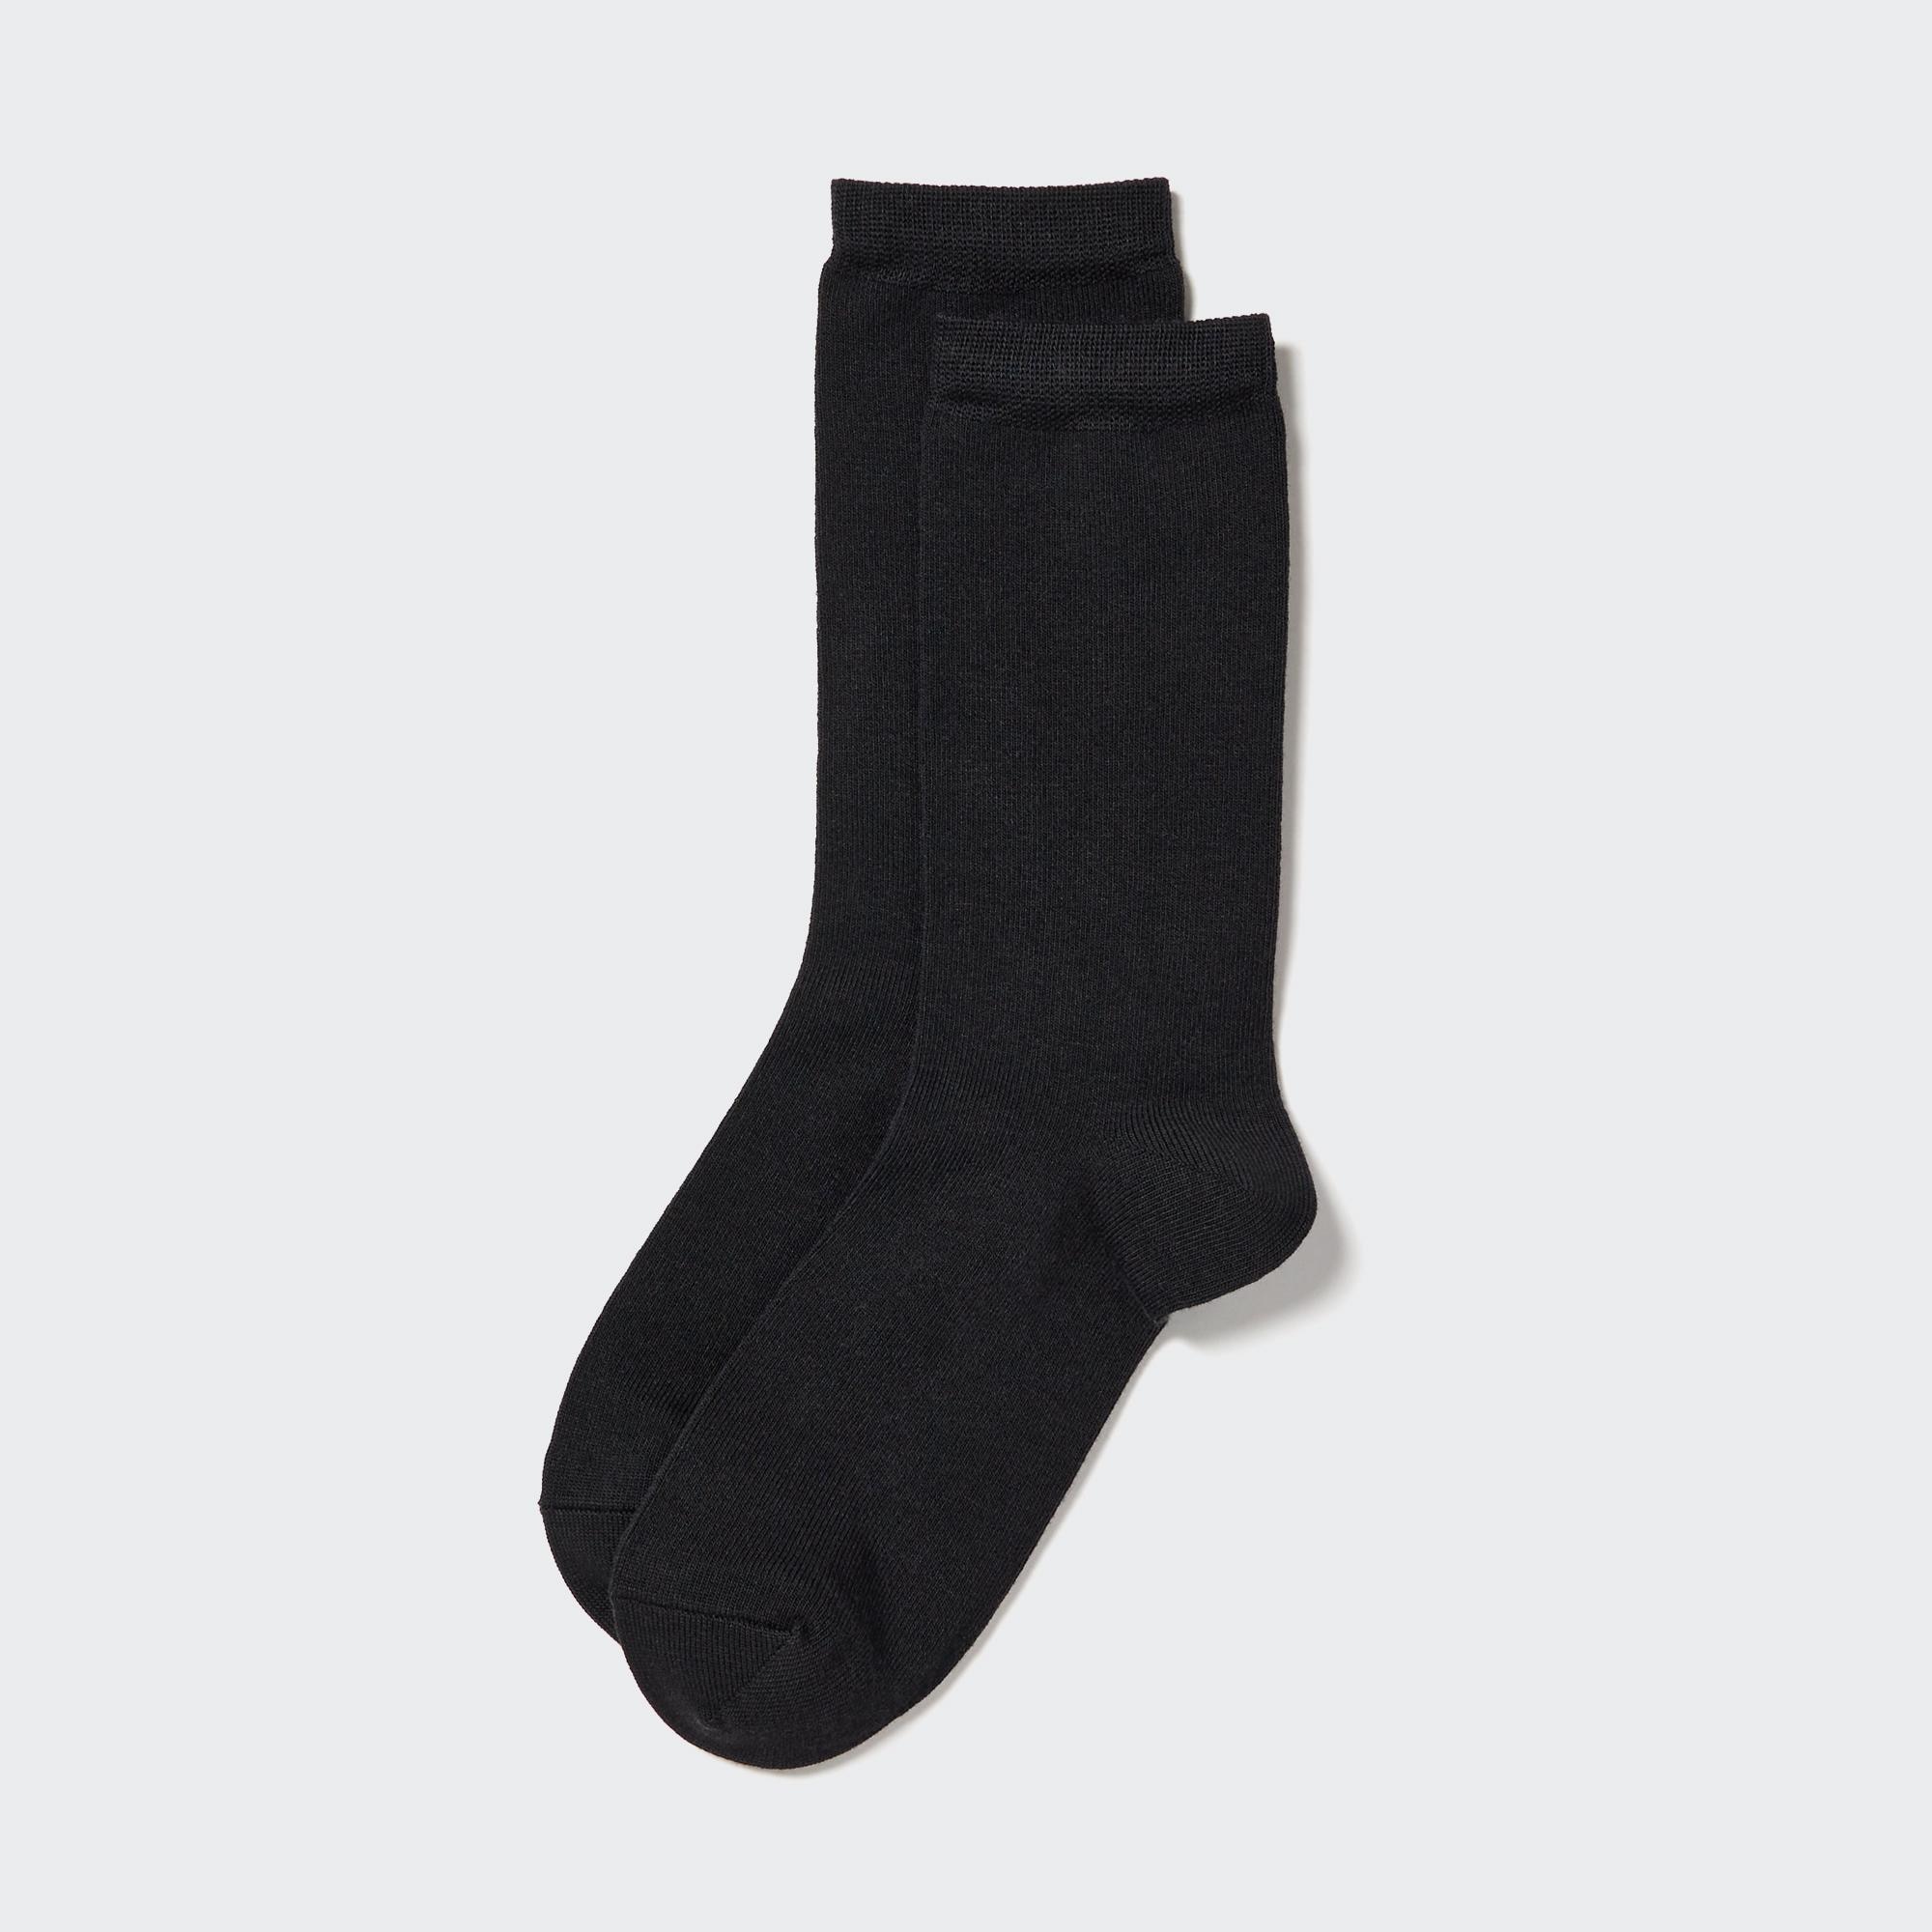 Heattech UniQLO Kids Extra Warm Leggings black Size 5-6. Brand New